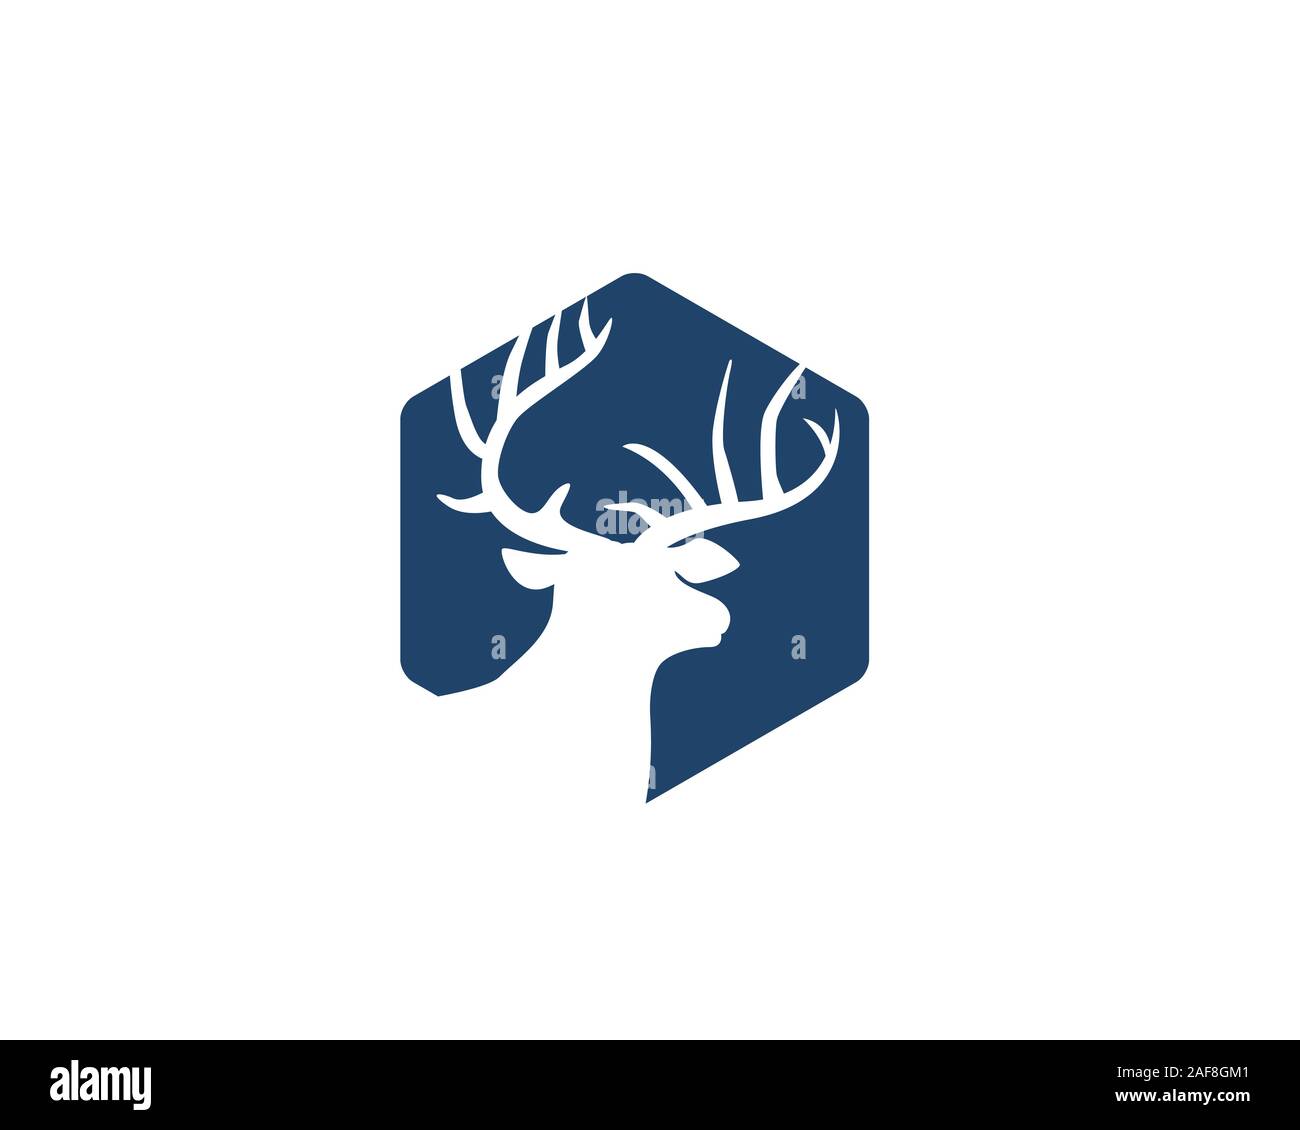 deer head with antlers as negative space inside hexagon logo Stock Vector